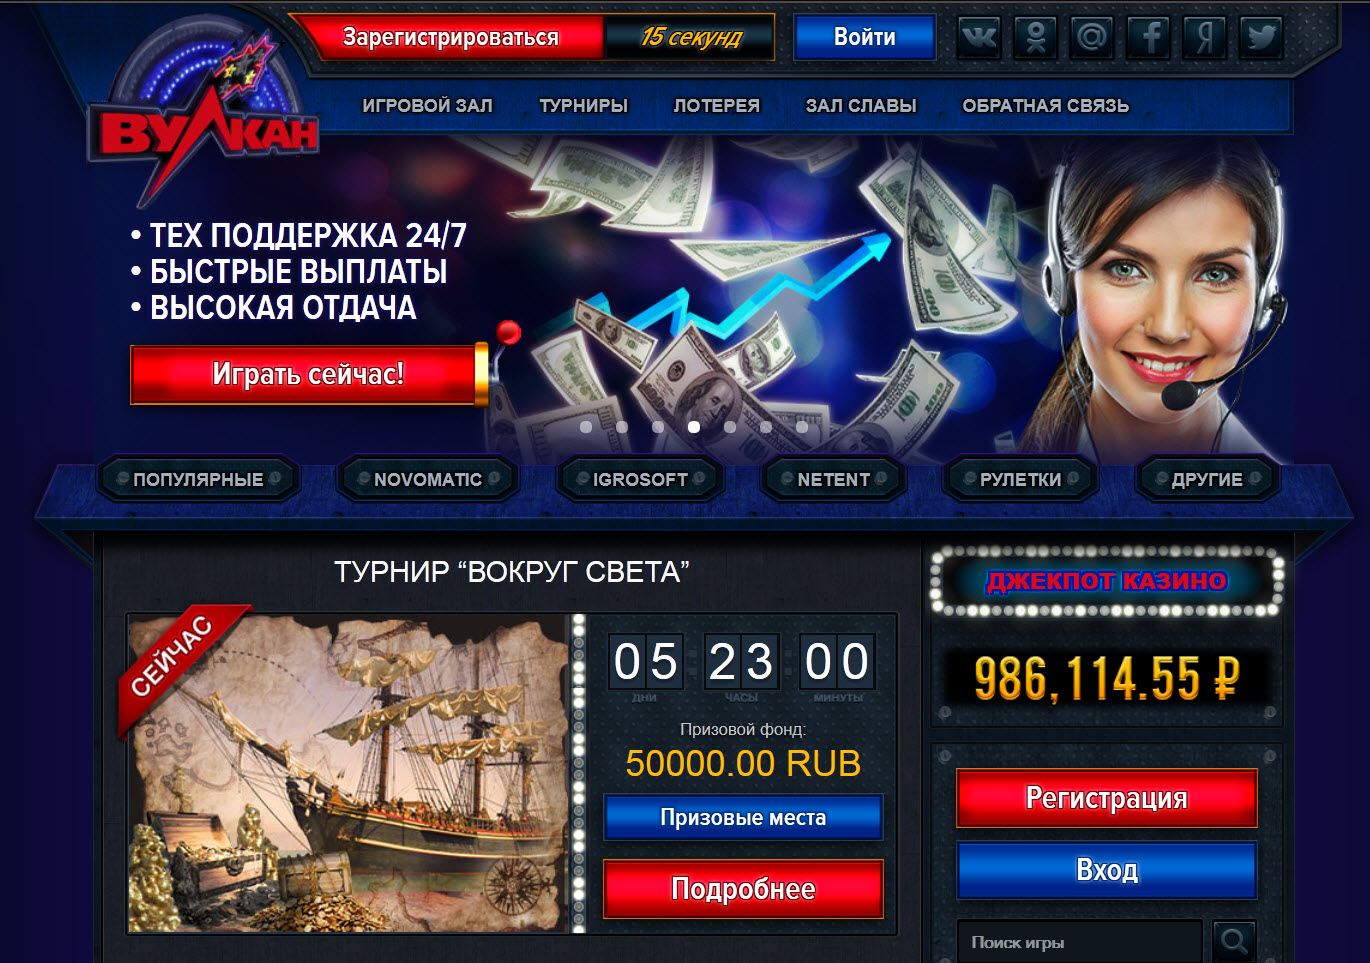 Онлайн казино с быстрыми выплатами casino engine адмирал х казино онлайн бездепозитный бонус forum